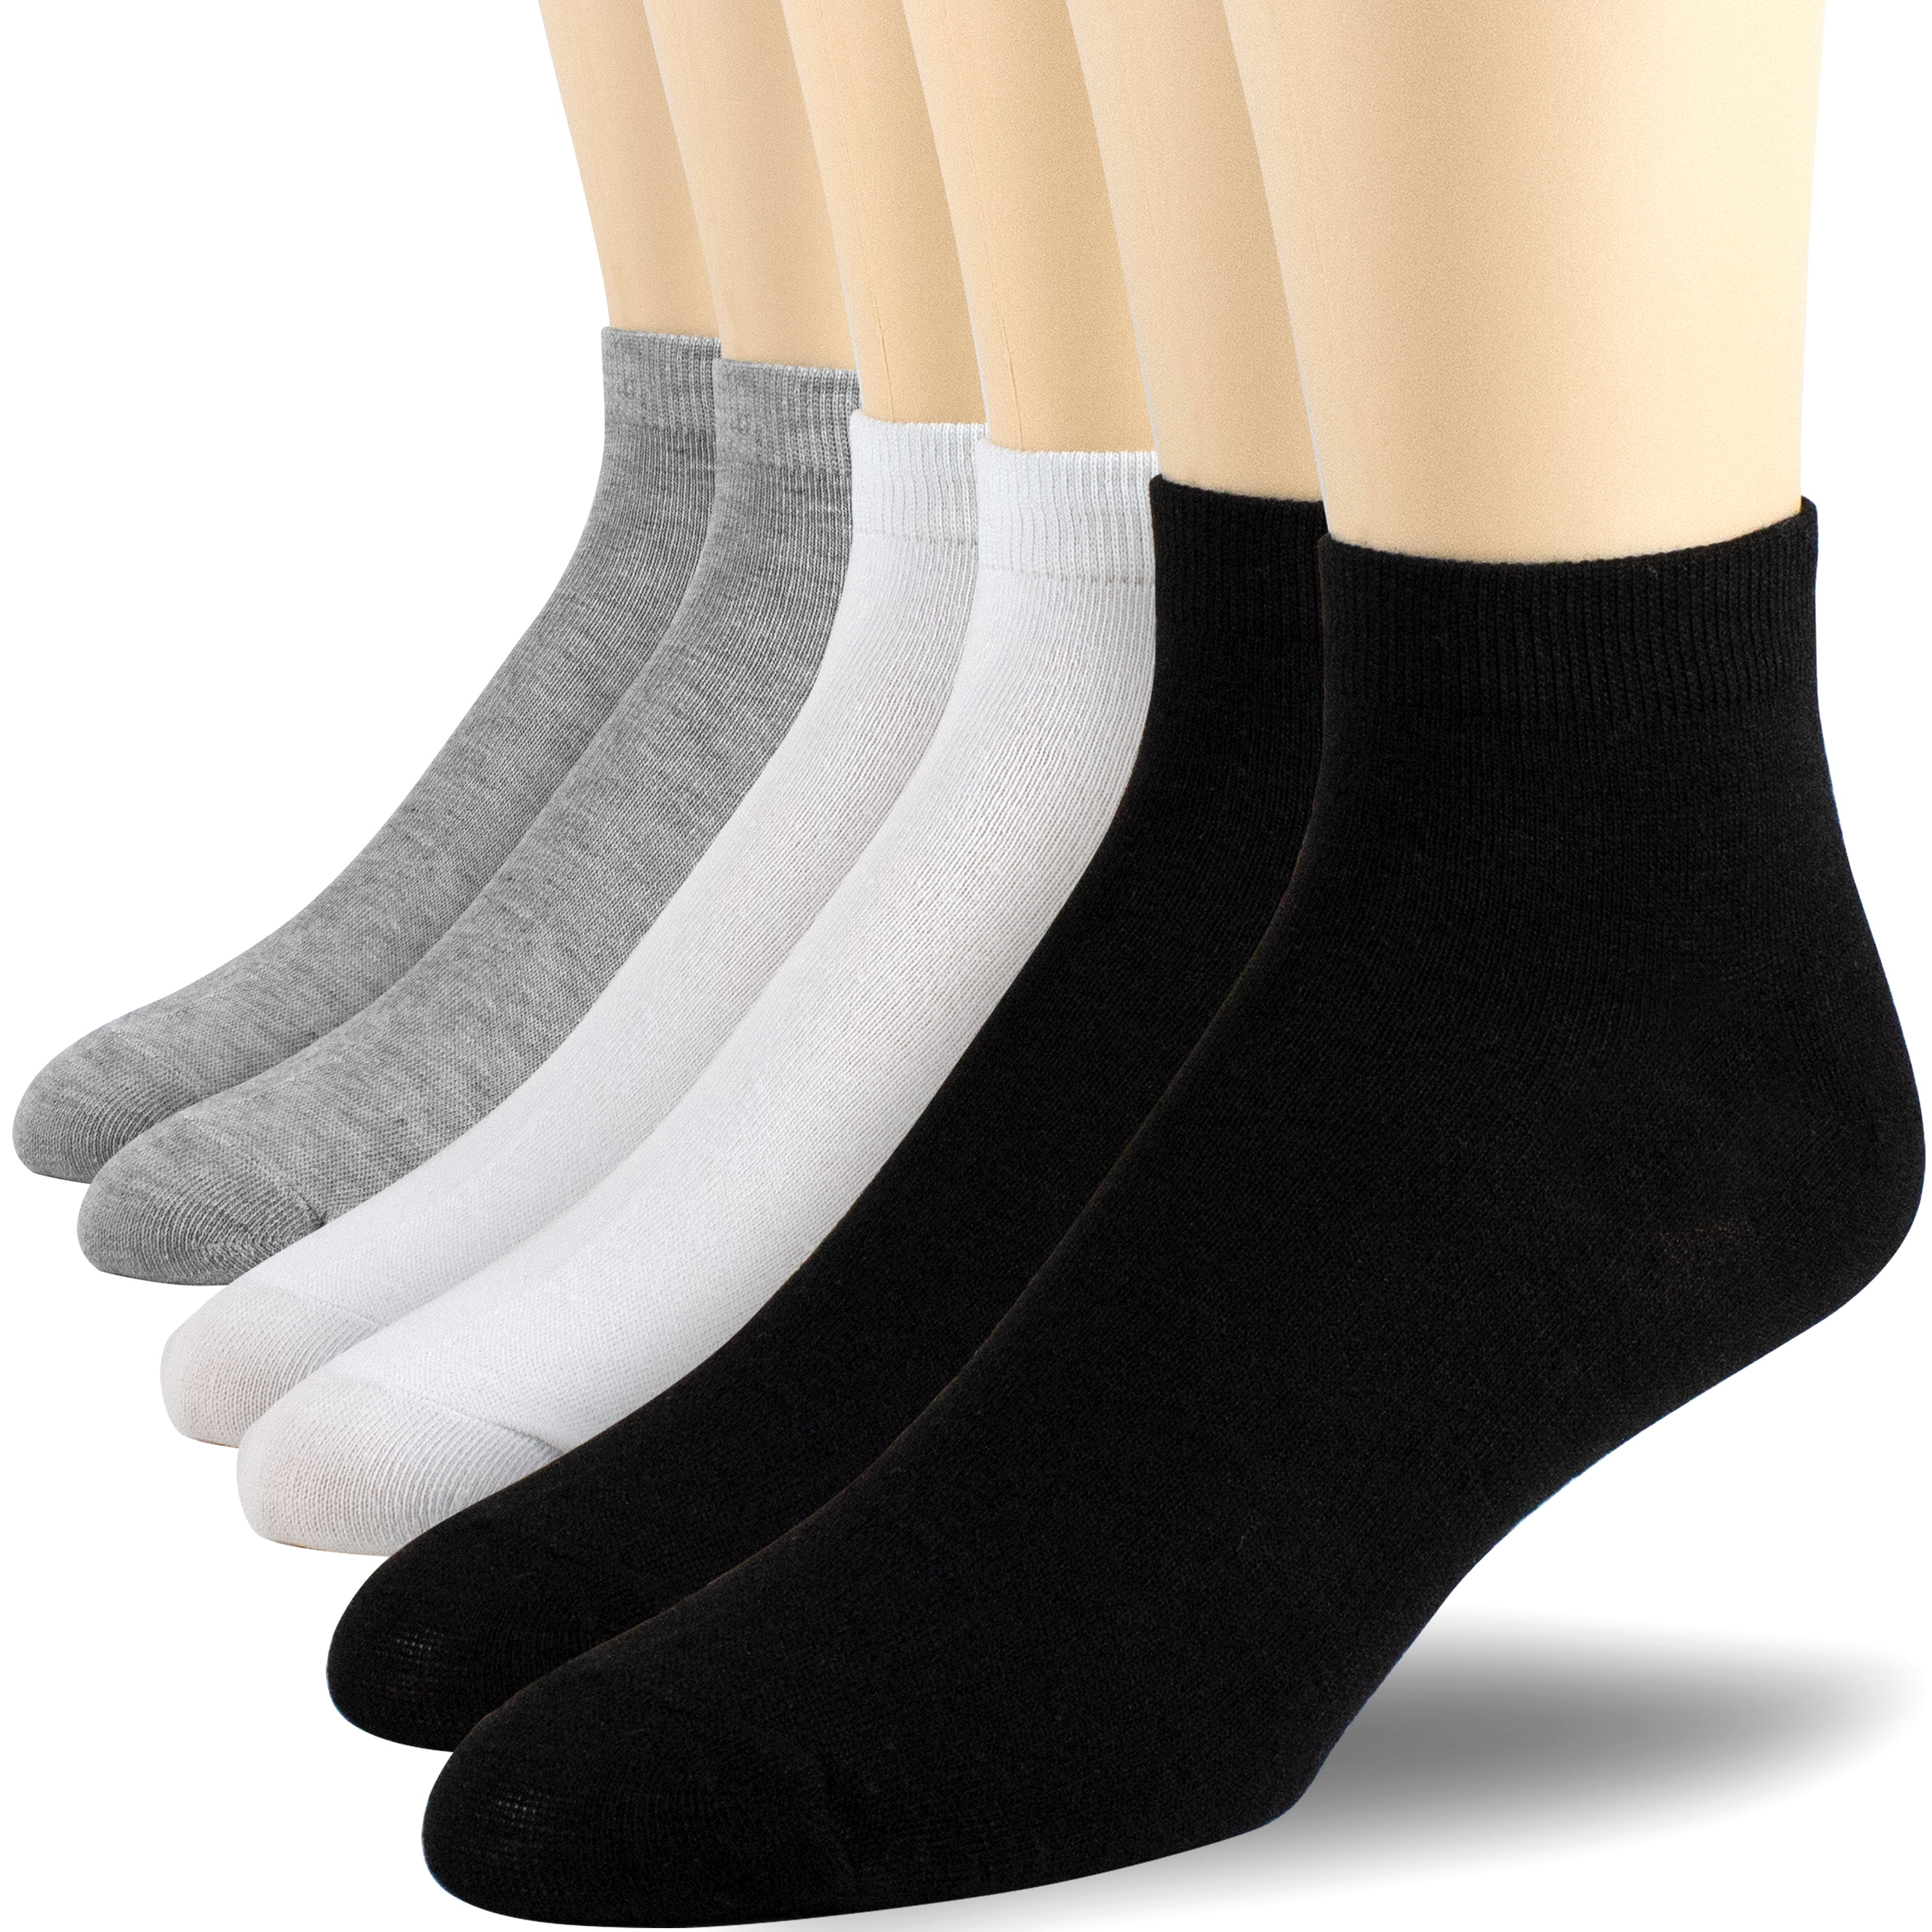 12 pairs Athletic Ankle Socks White Cotton Unisex  Good Quality 4 10-13 9-11 